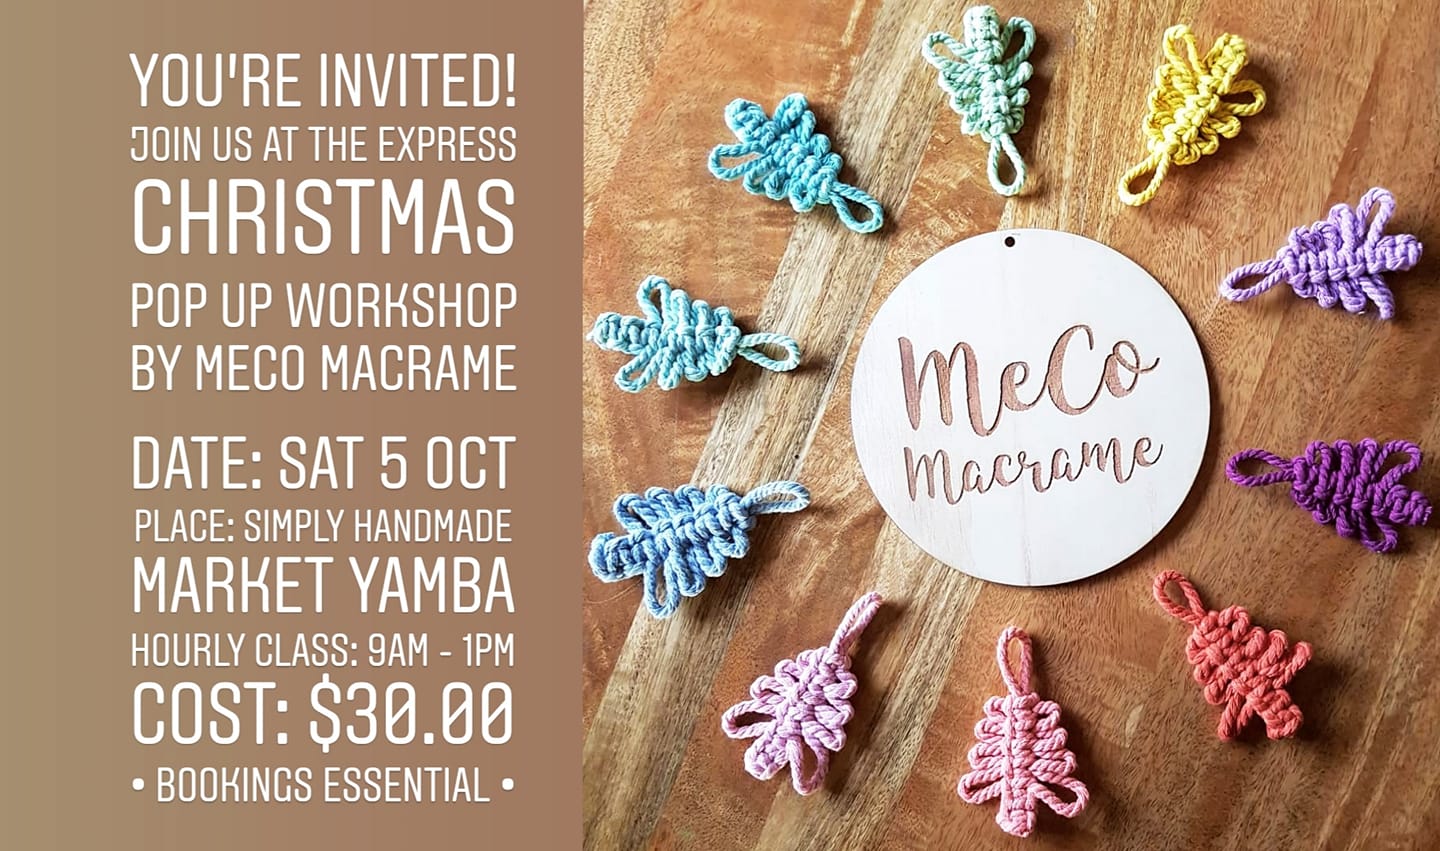 MeCo Macrame – Pop up Christmas workshop